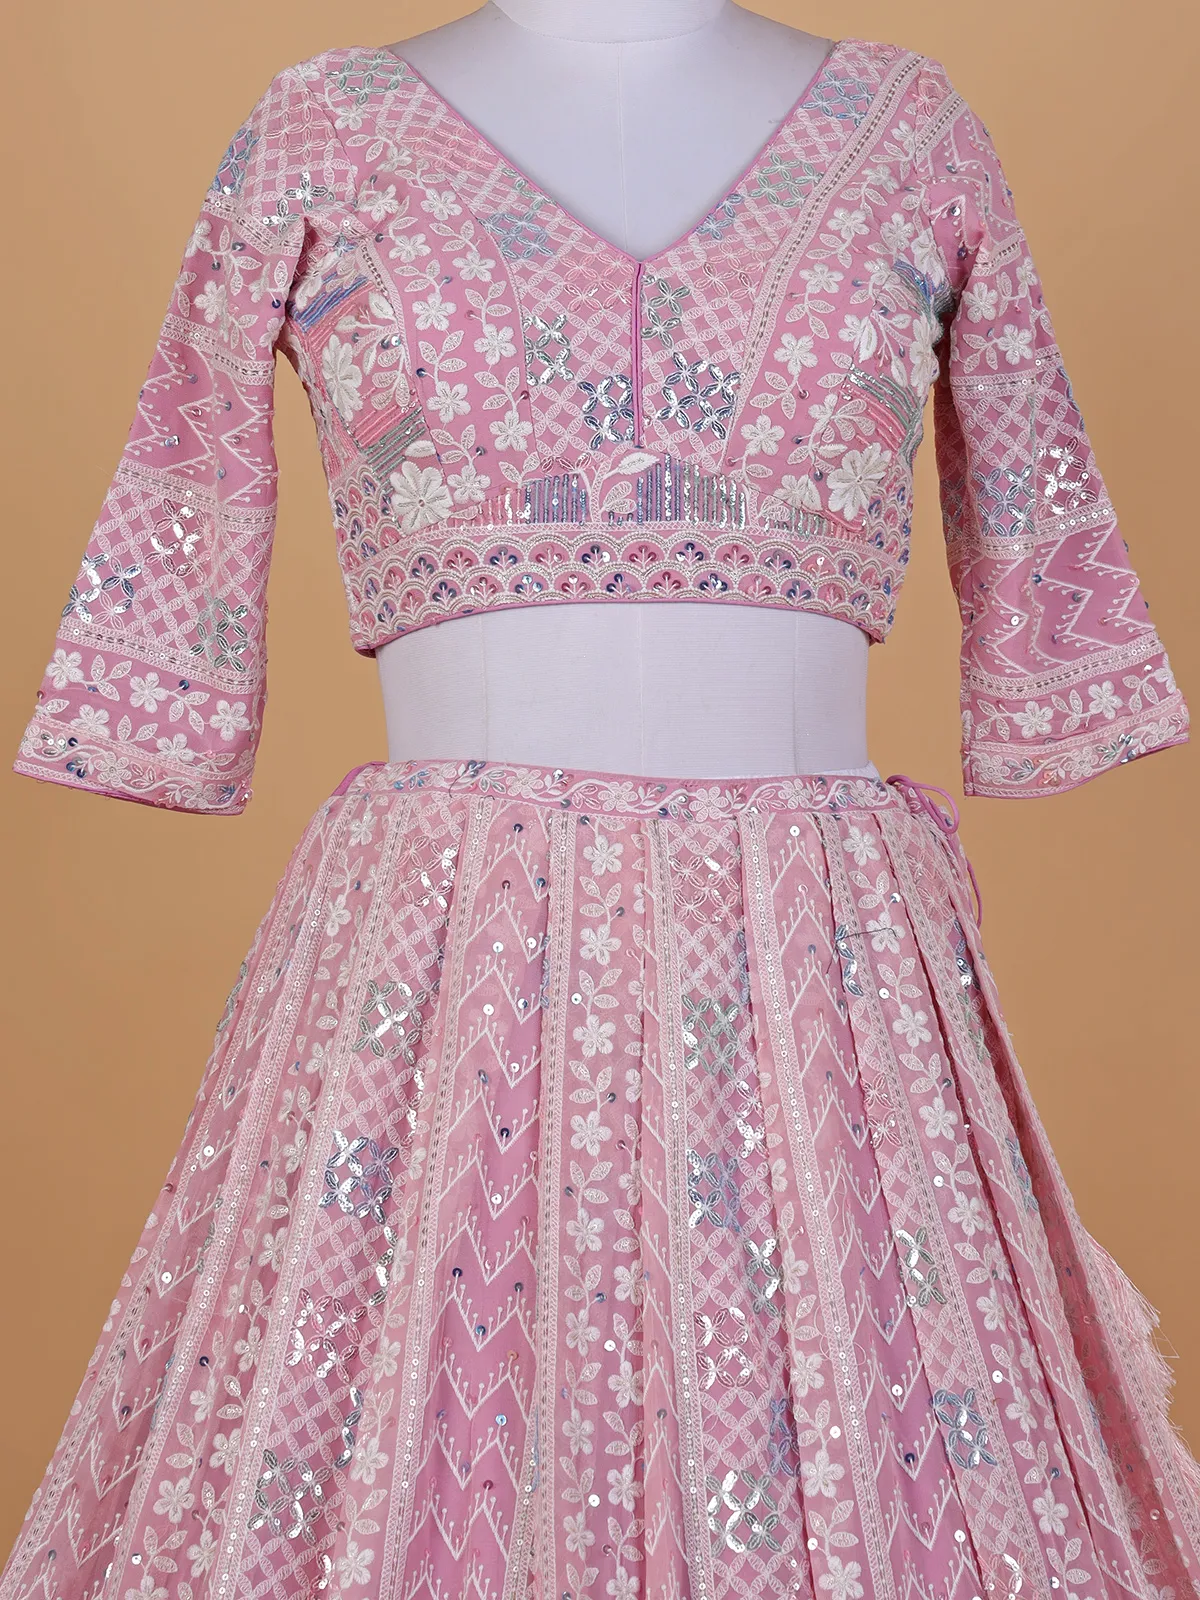 Stunning light pink embroidery lehenga choli